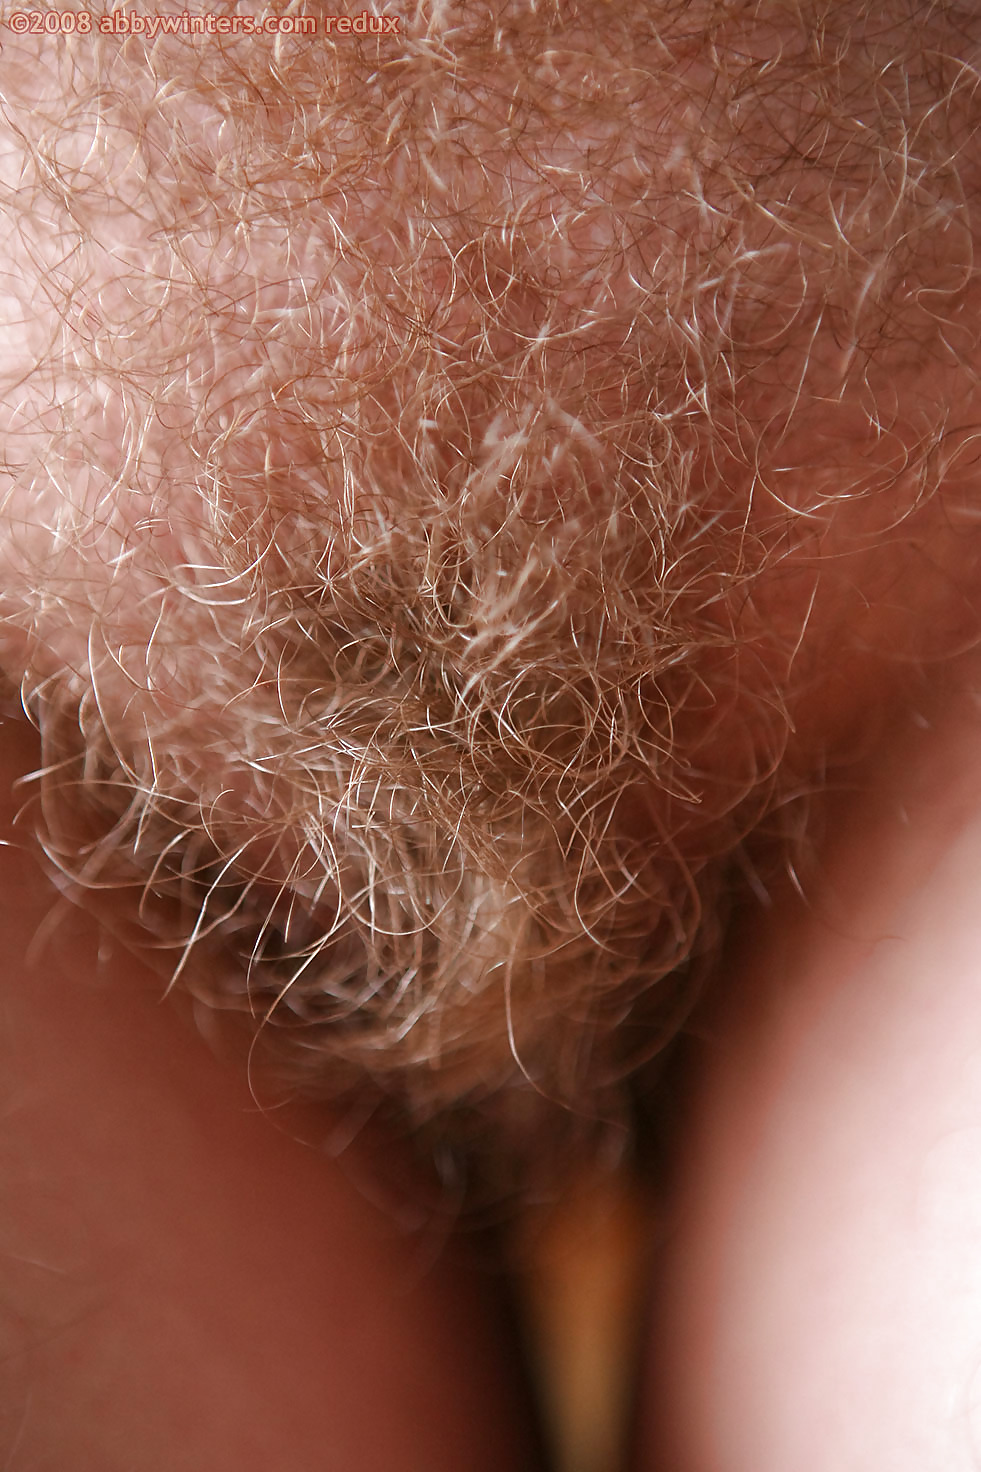 Nice hairy close-up  #2457407